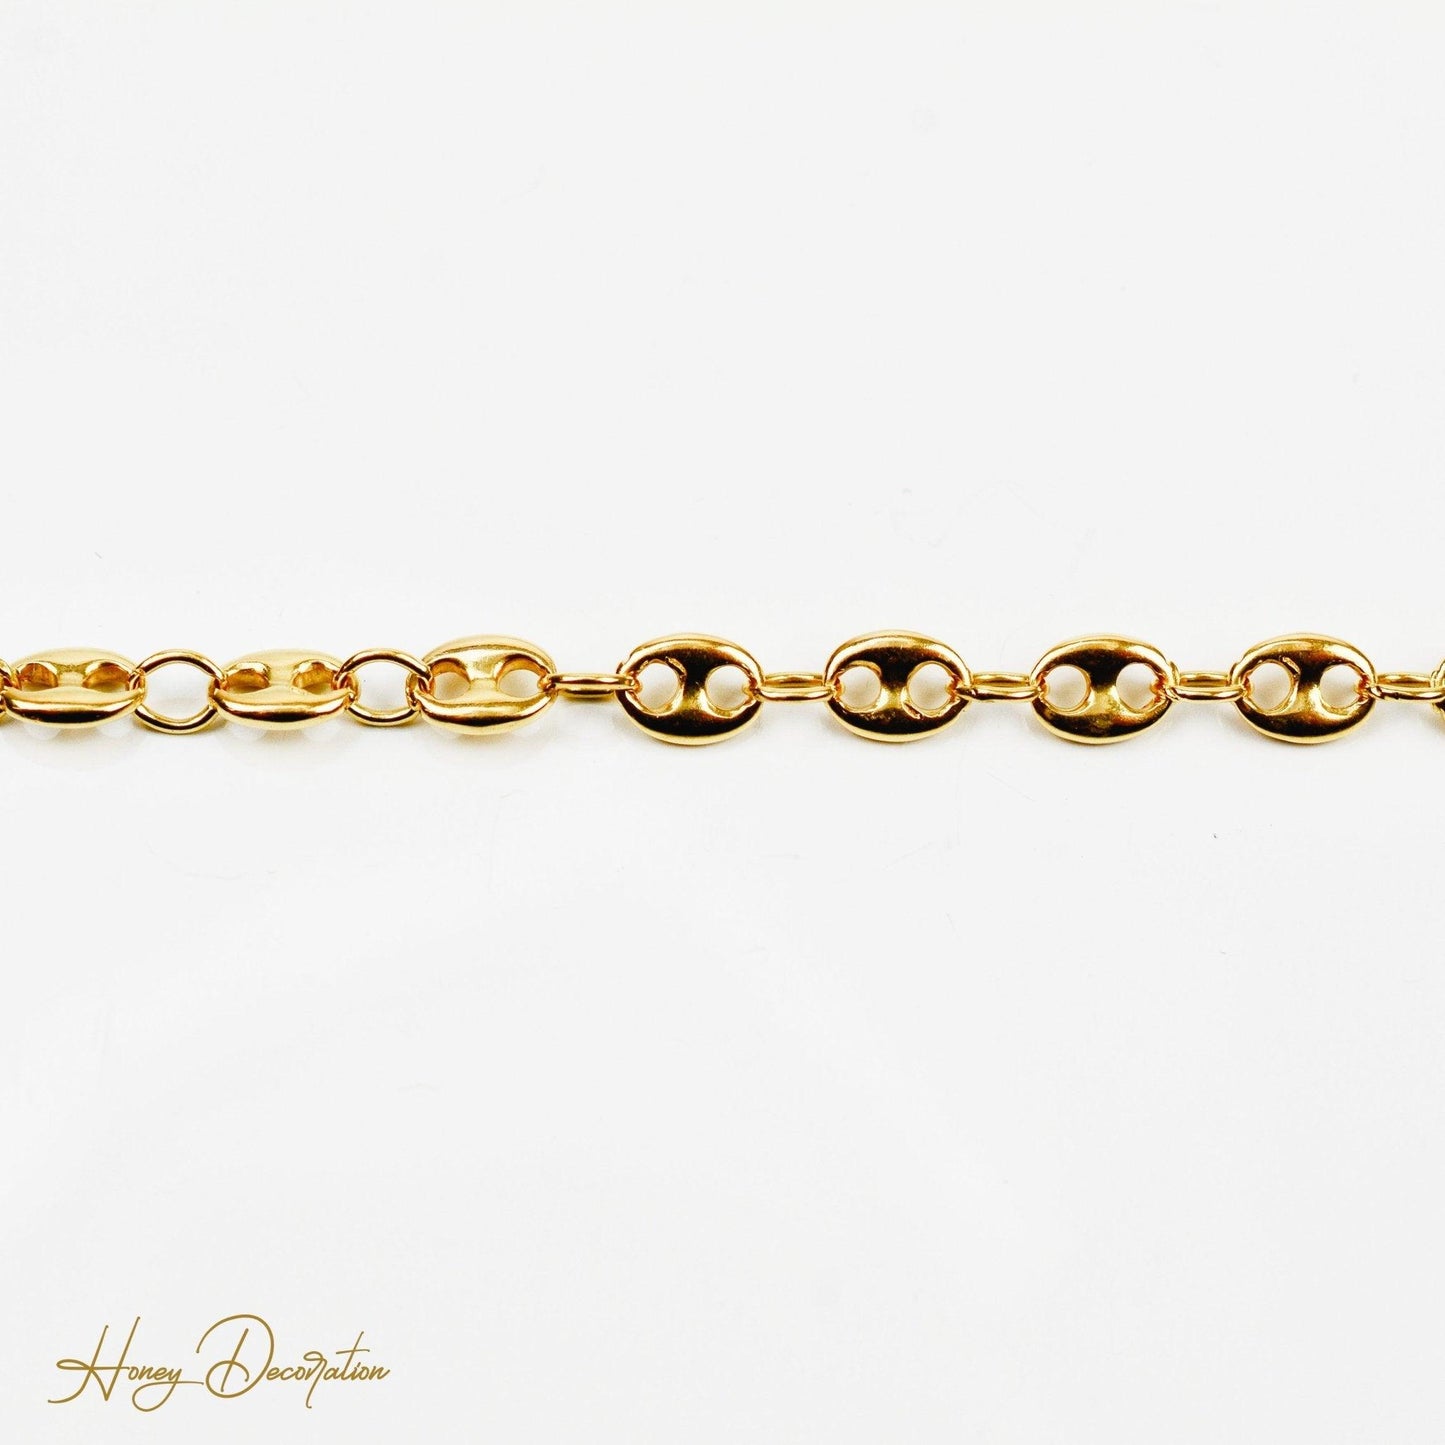 Süßes Armband aus 585 Gelbgold - Honey Decoration